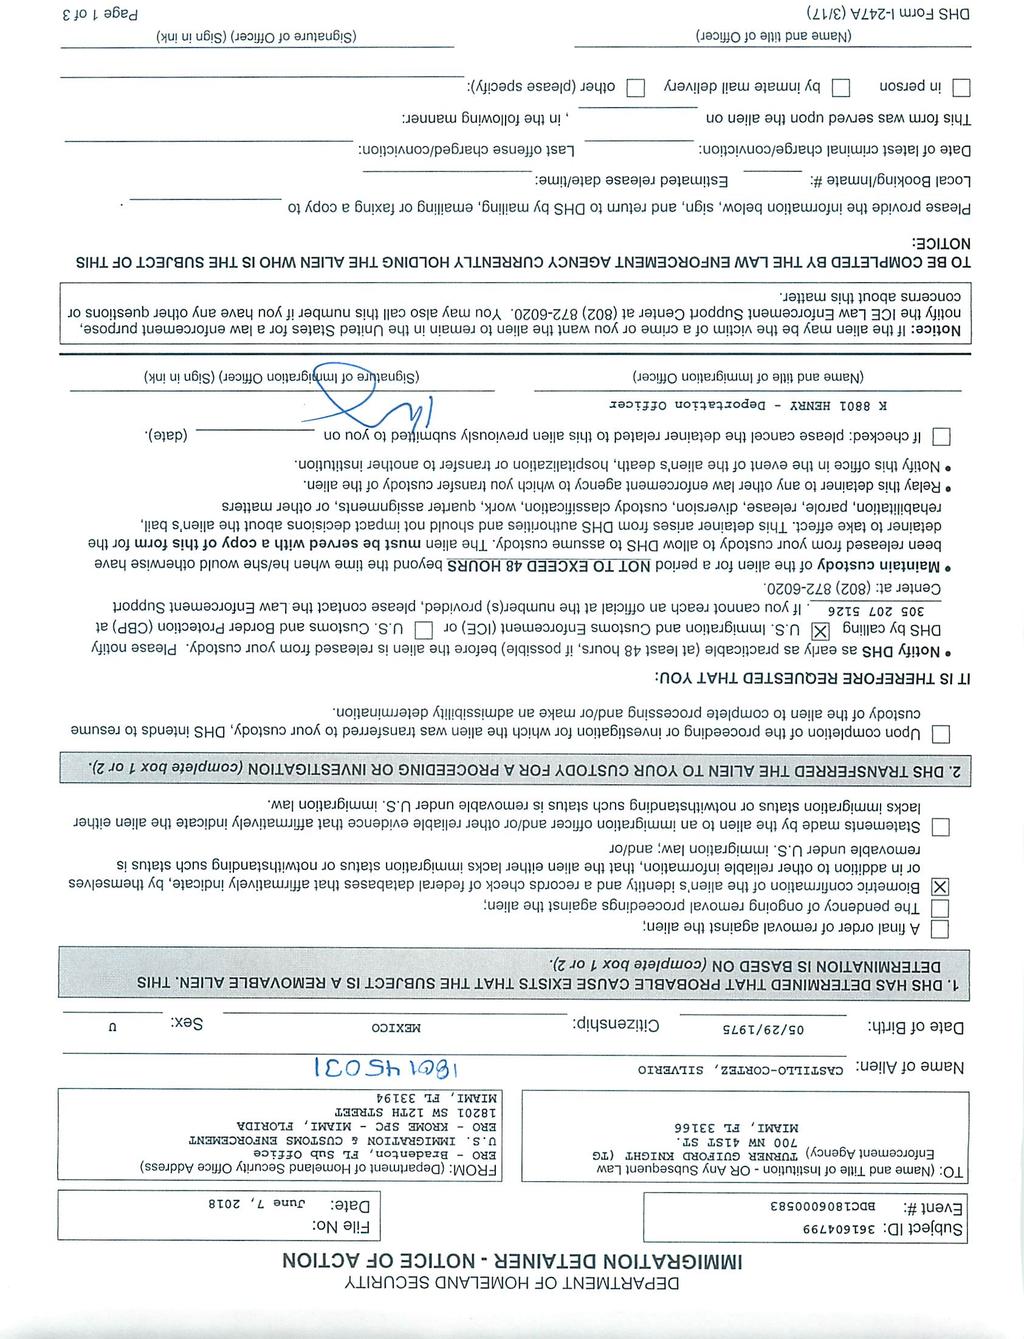 Case 1:18-cv-22956-XXXX Document 1-1